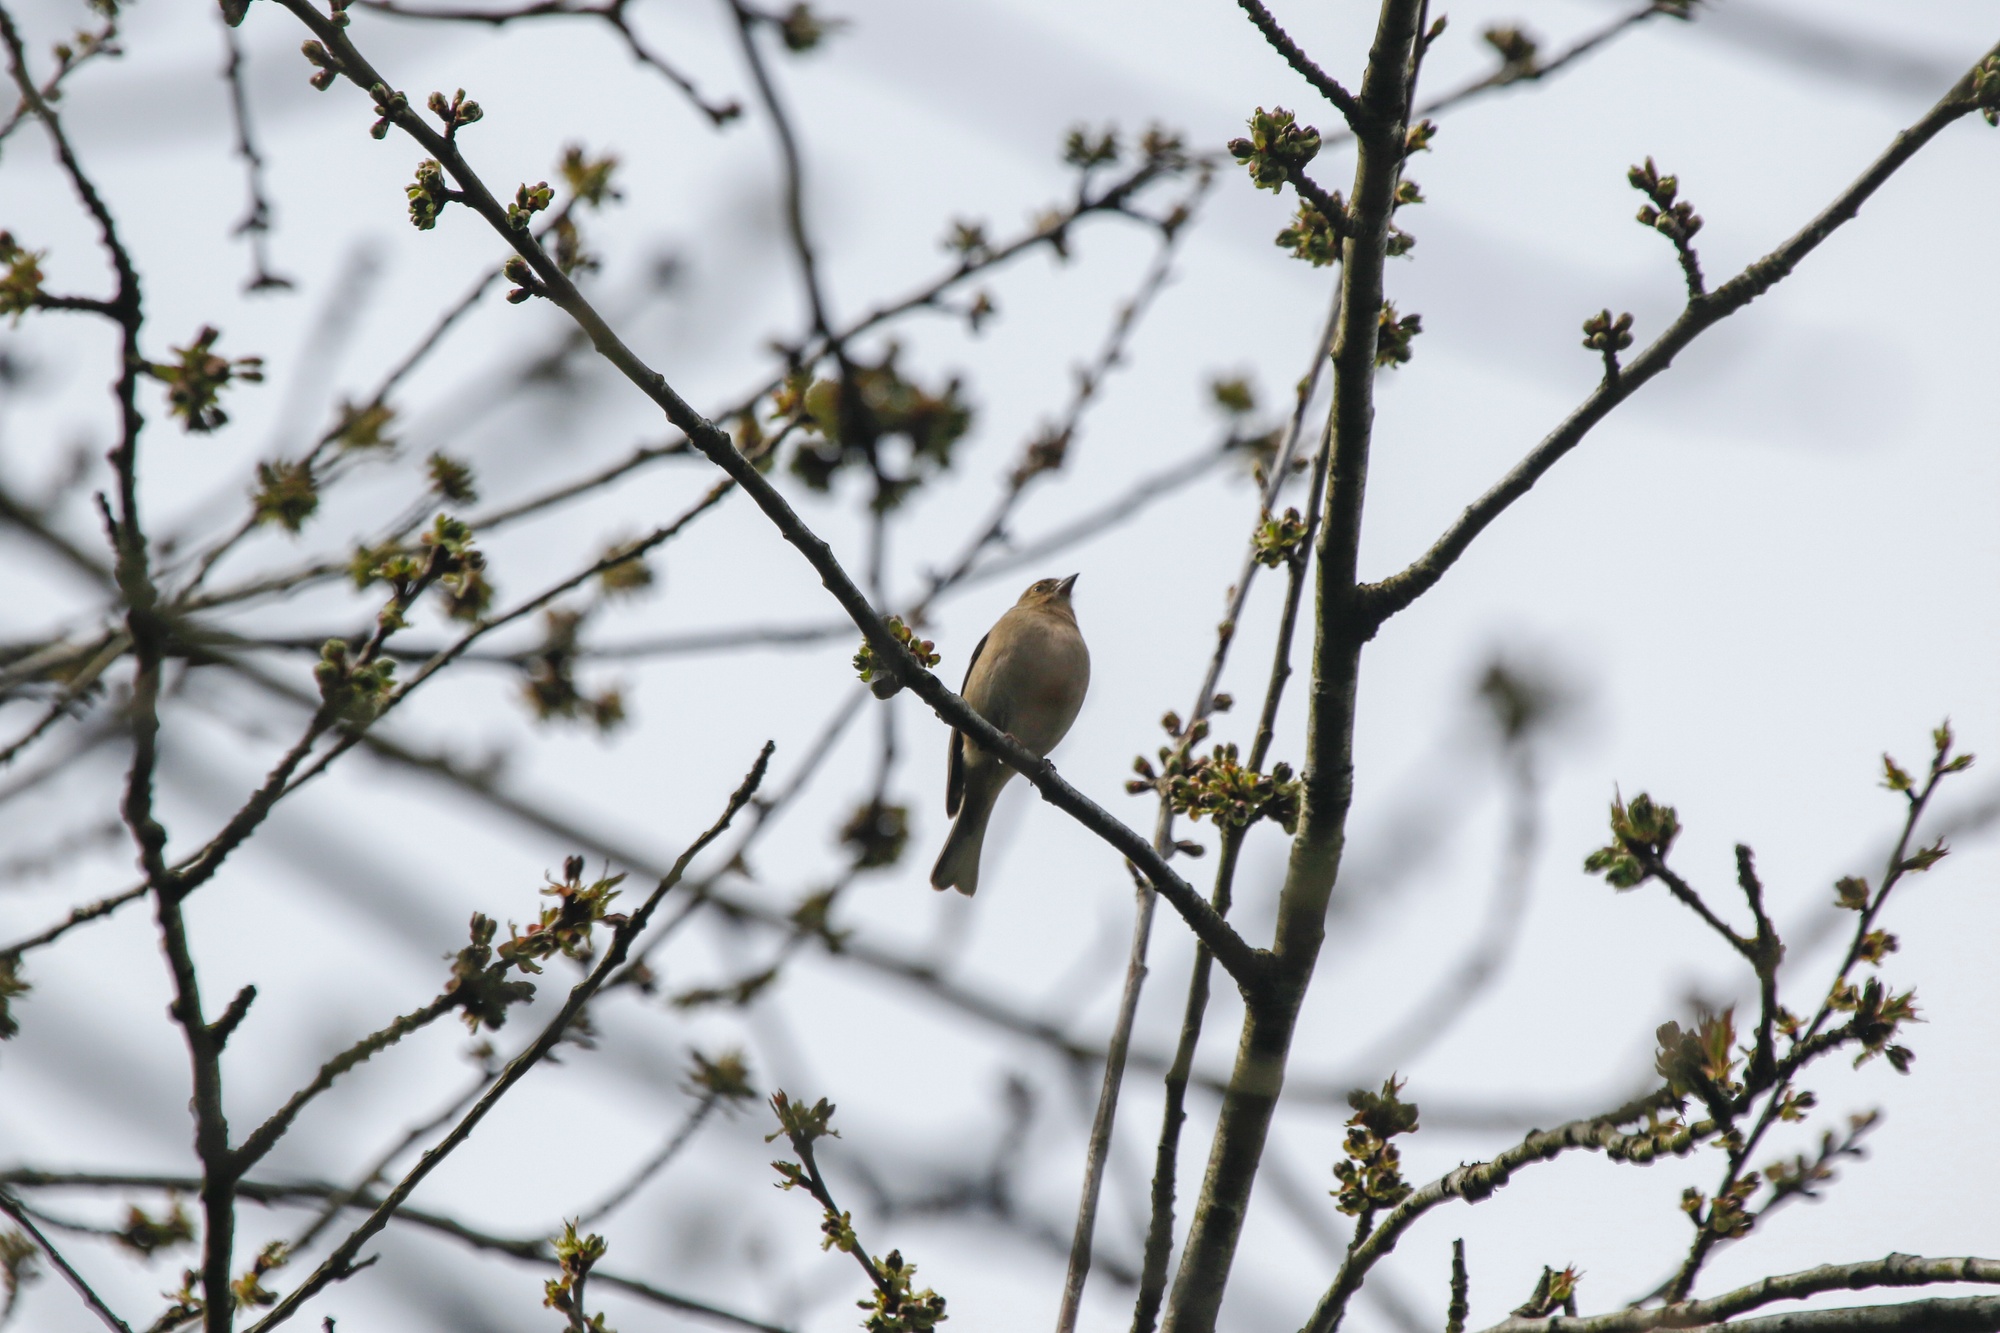 Warbler from below sitting on branch in tree